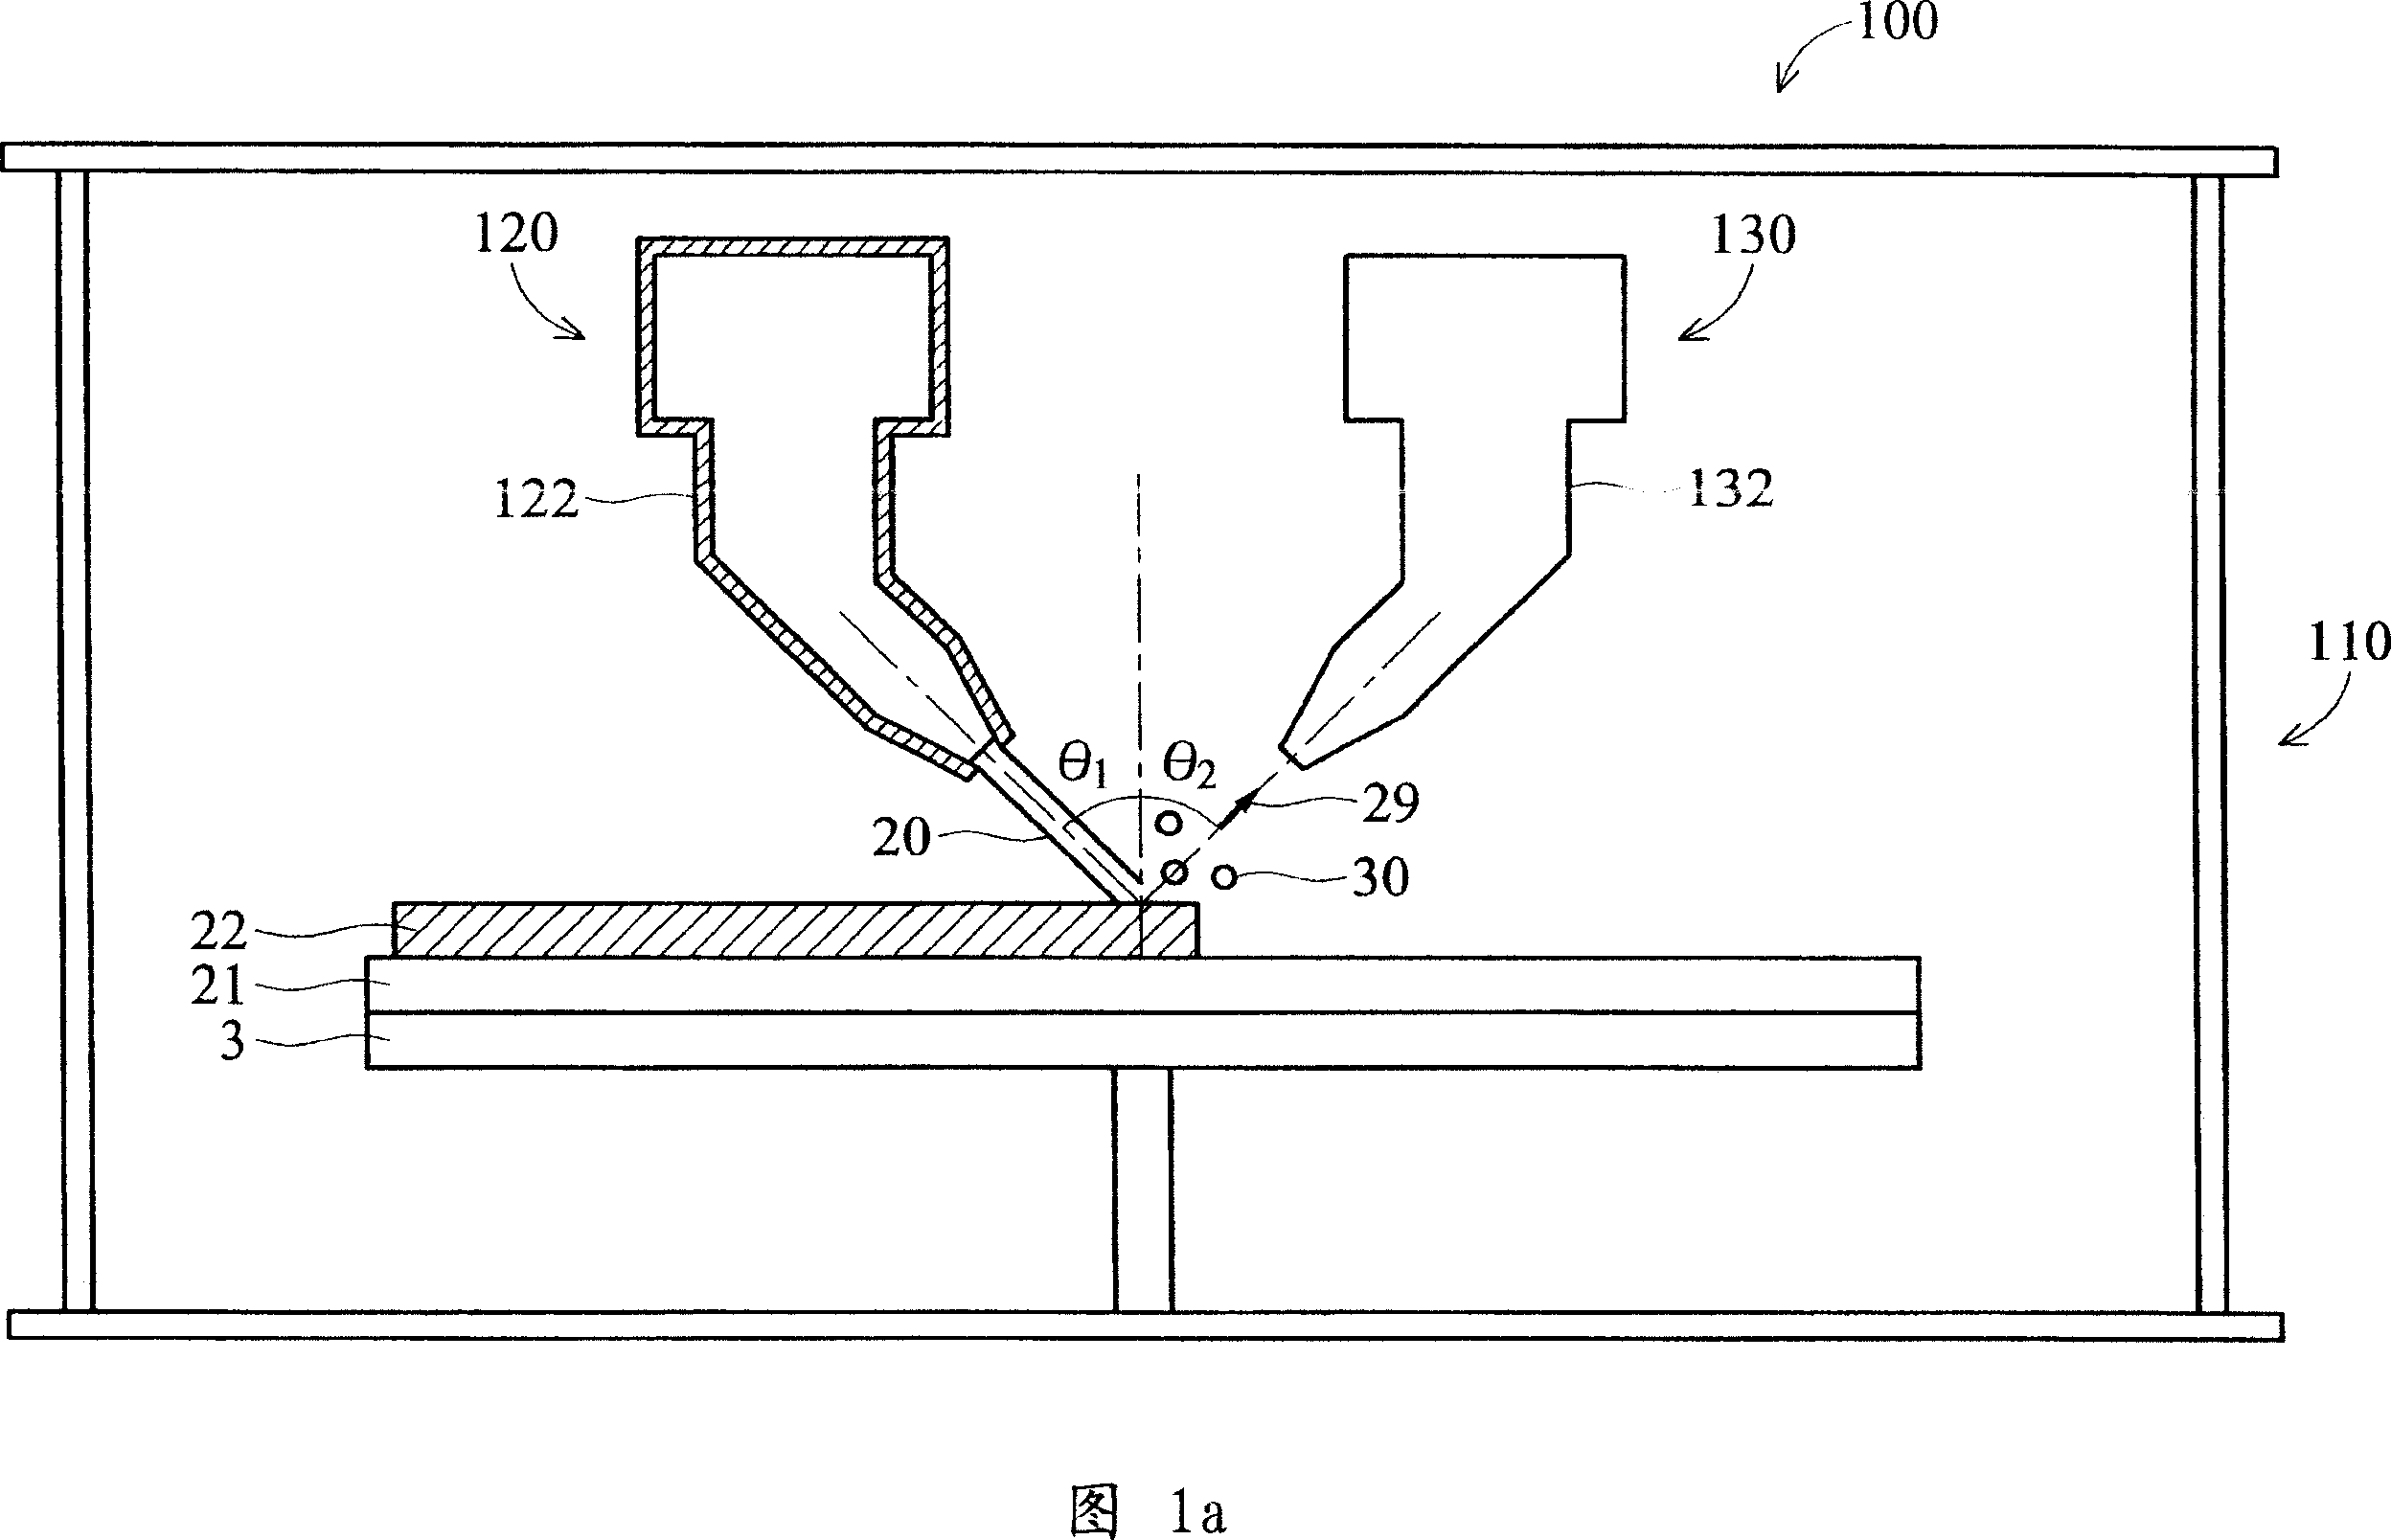 Plasma film coating device and method